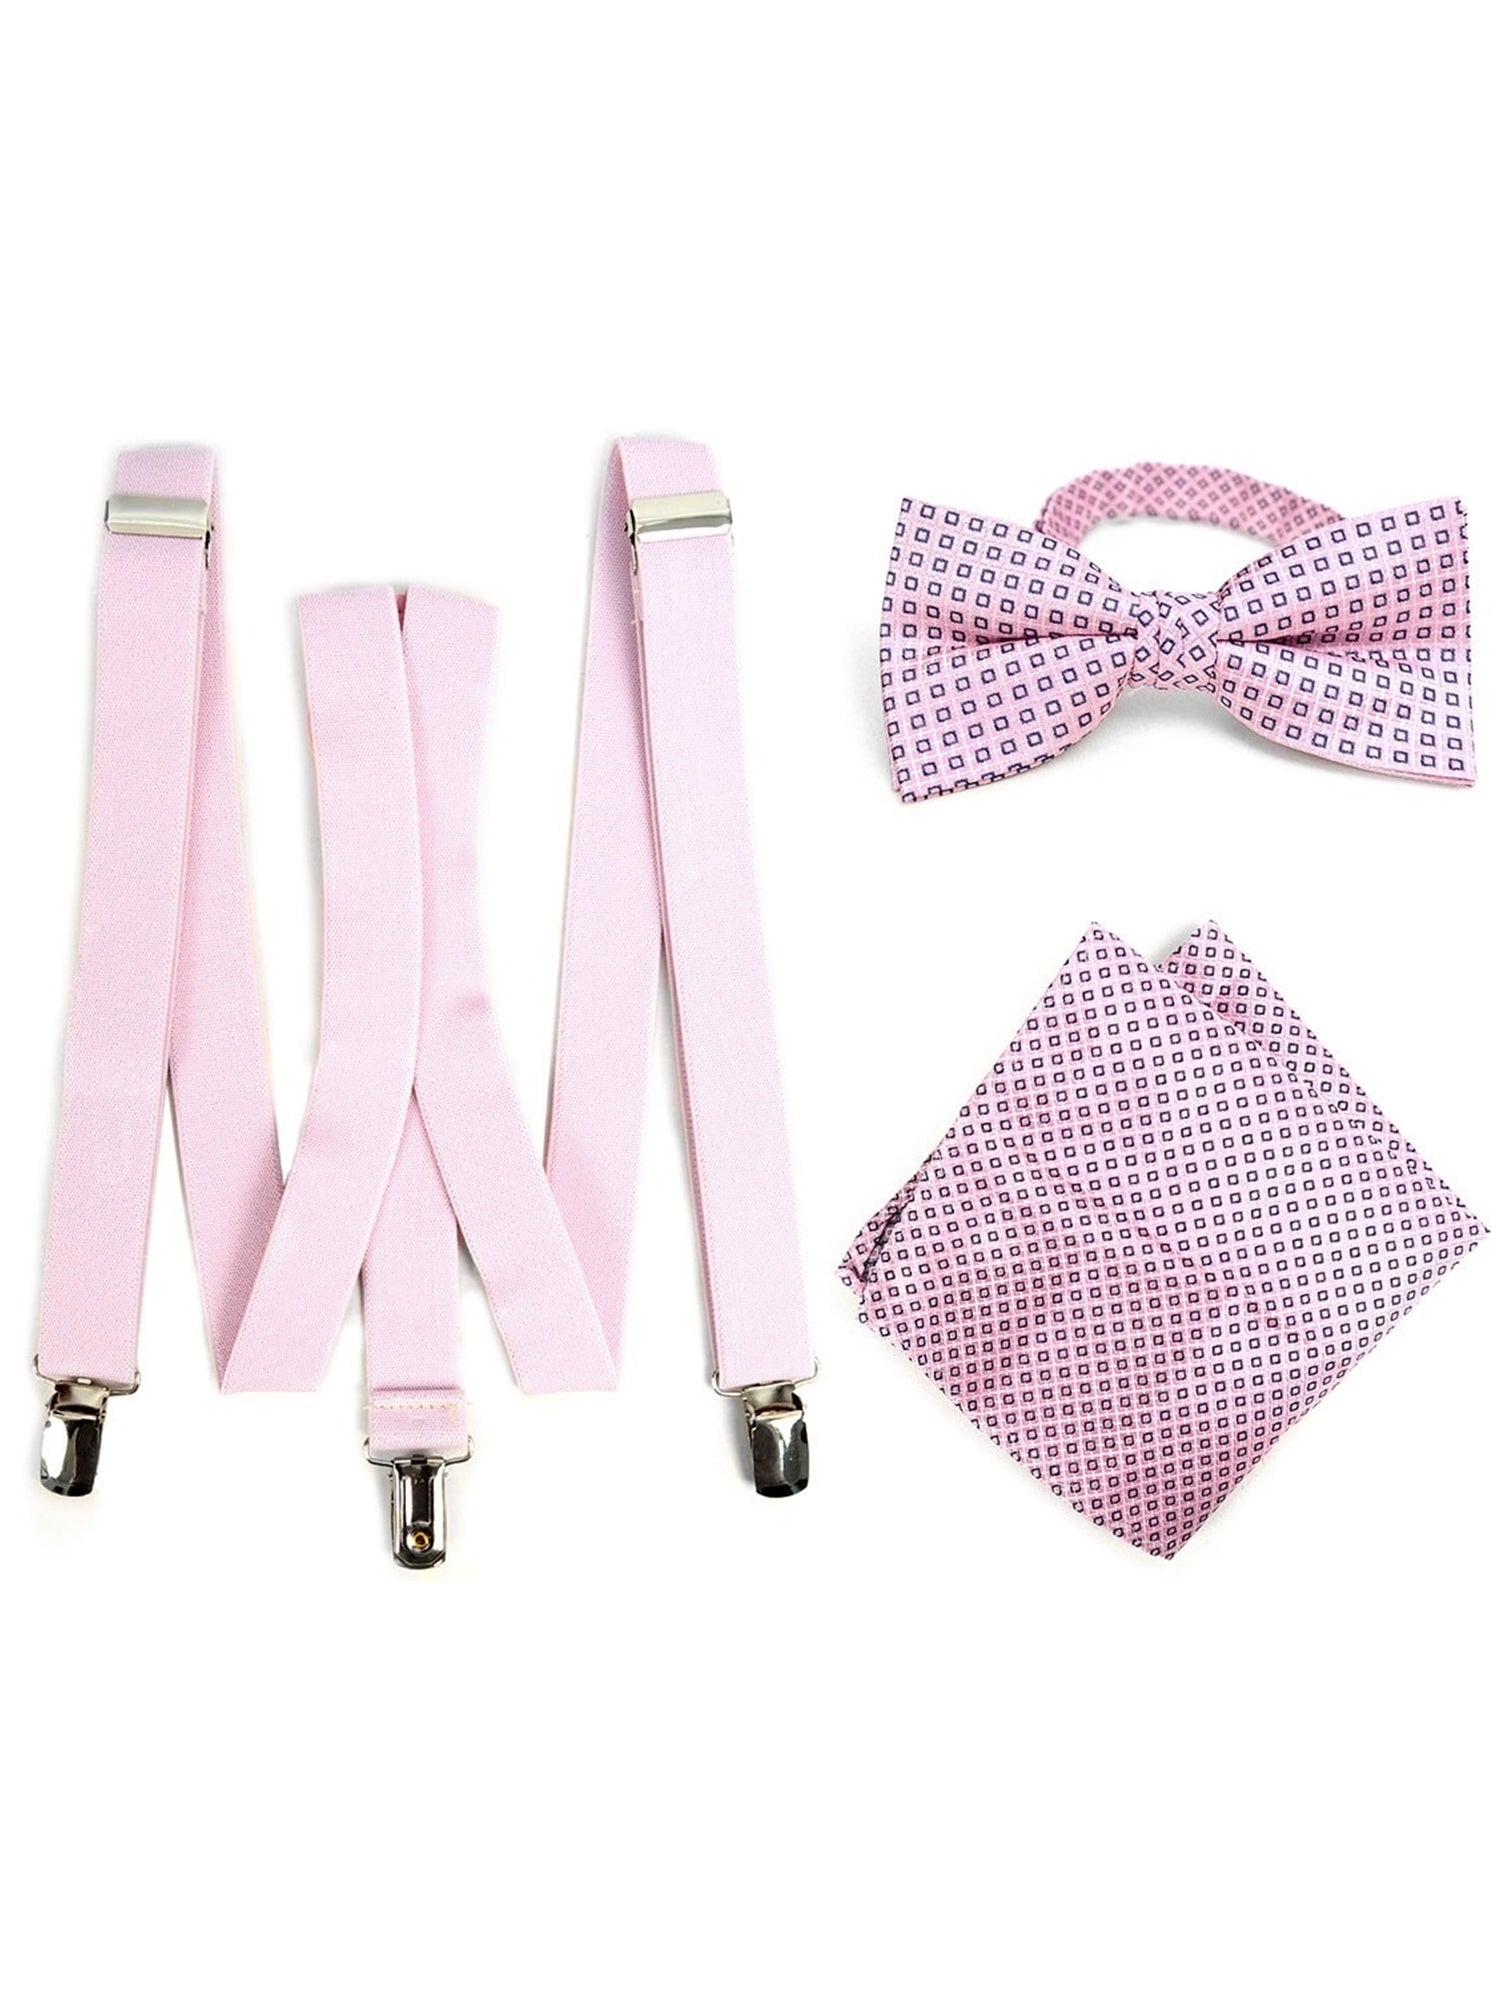 Men's Fuchsia 3 PC Clip-on Suspenders, Bow Tie & Hanky Sets Men's Solid Color Bow Tie TheDapperTie Pink # 1 Regular 